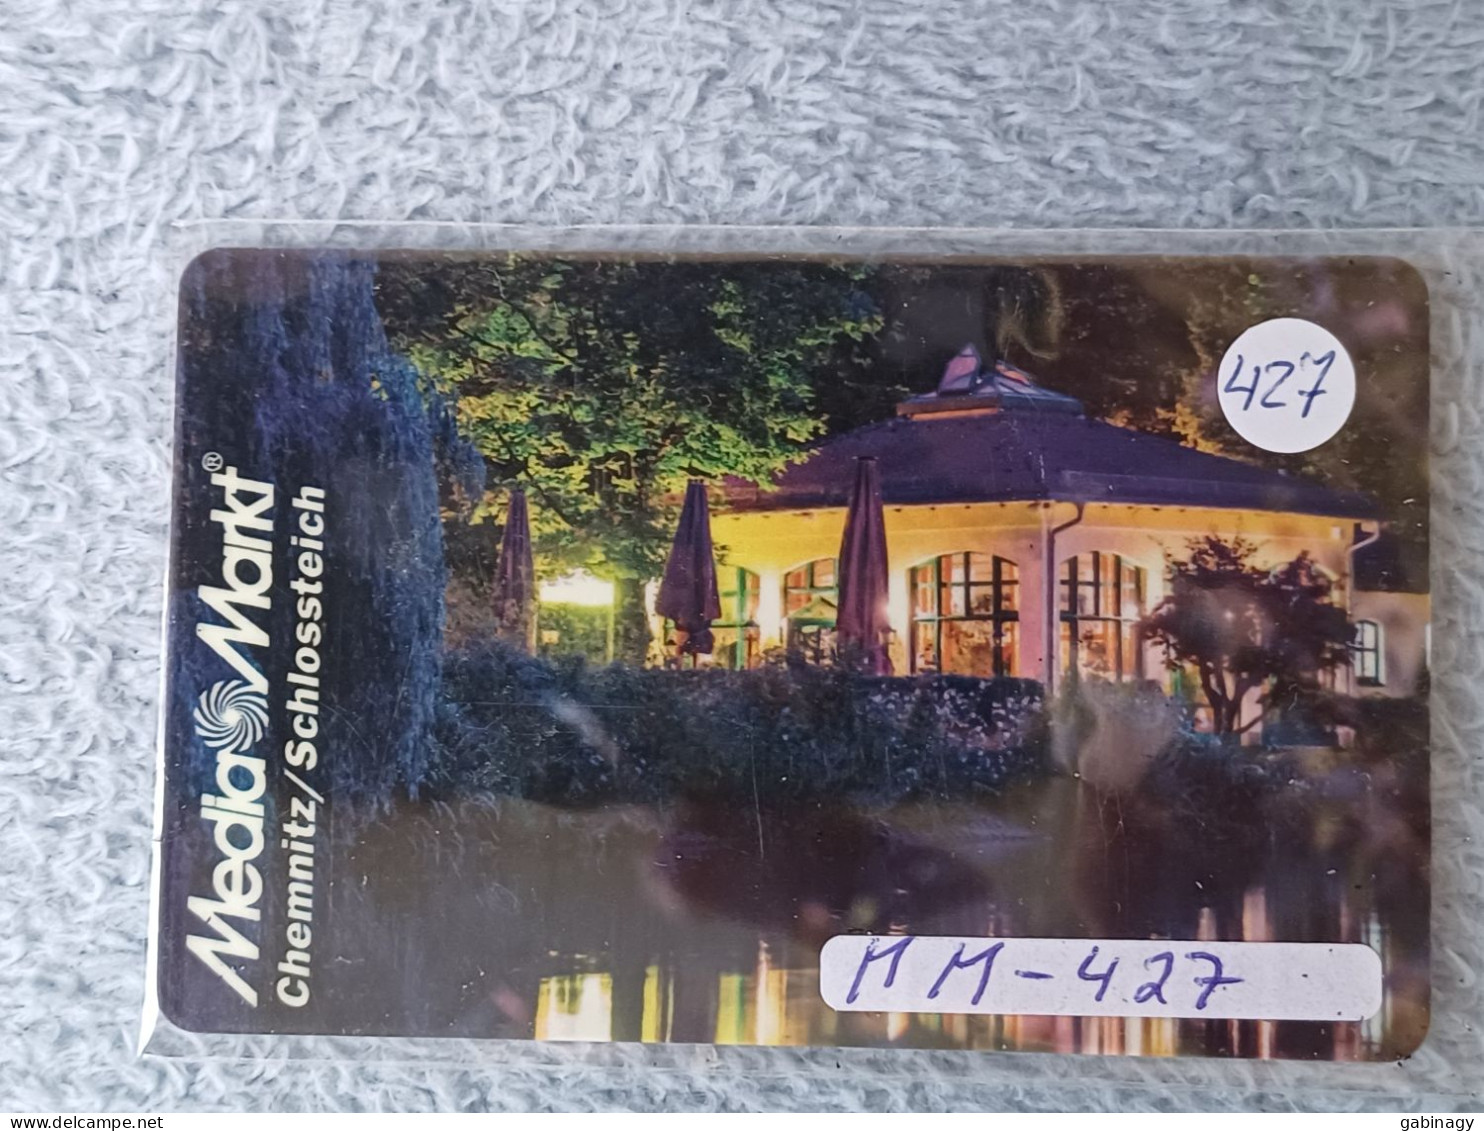 GIFT CARD - GERMANY - MEDIA MARKT 427 - Chemnitz - Schlossteich - Gift Cards